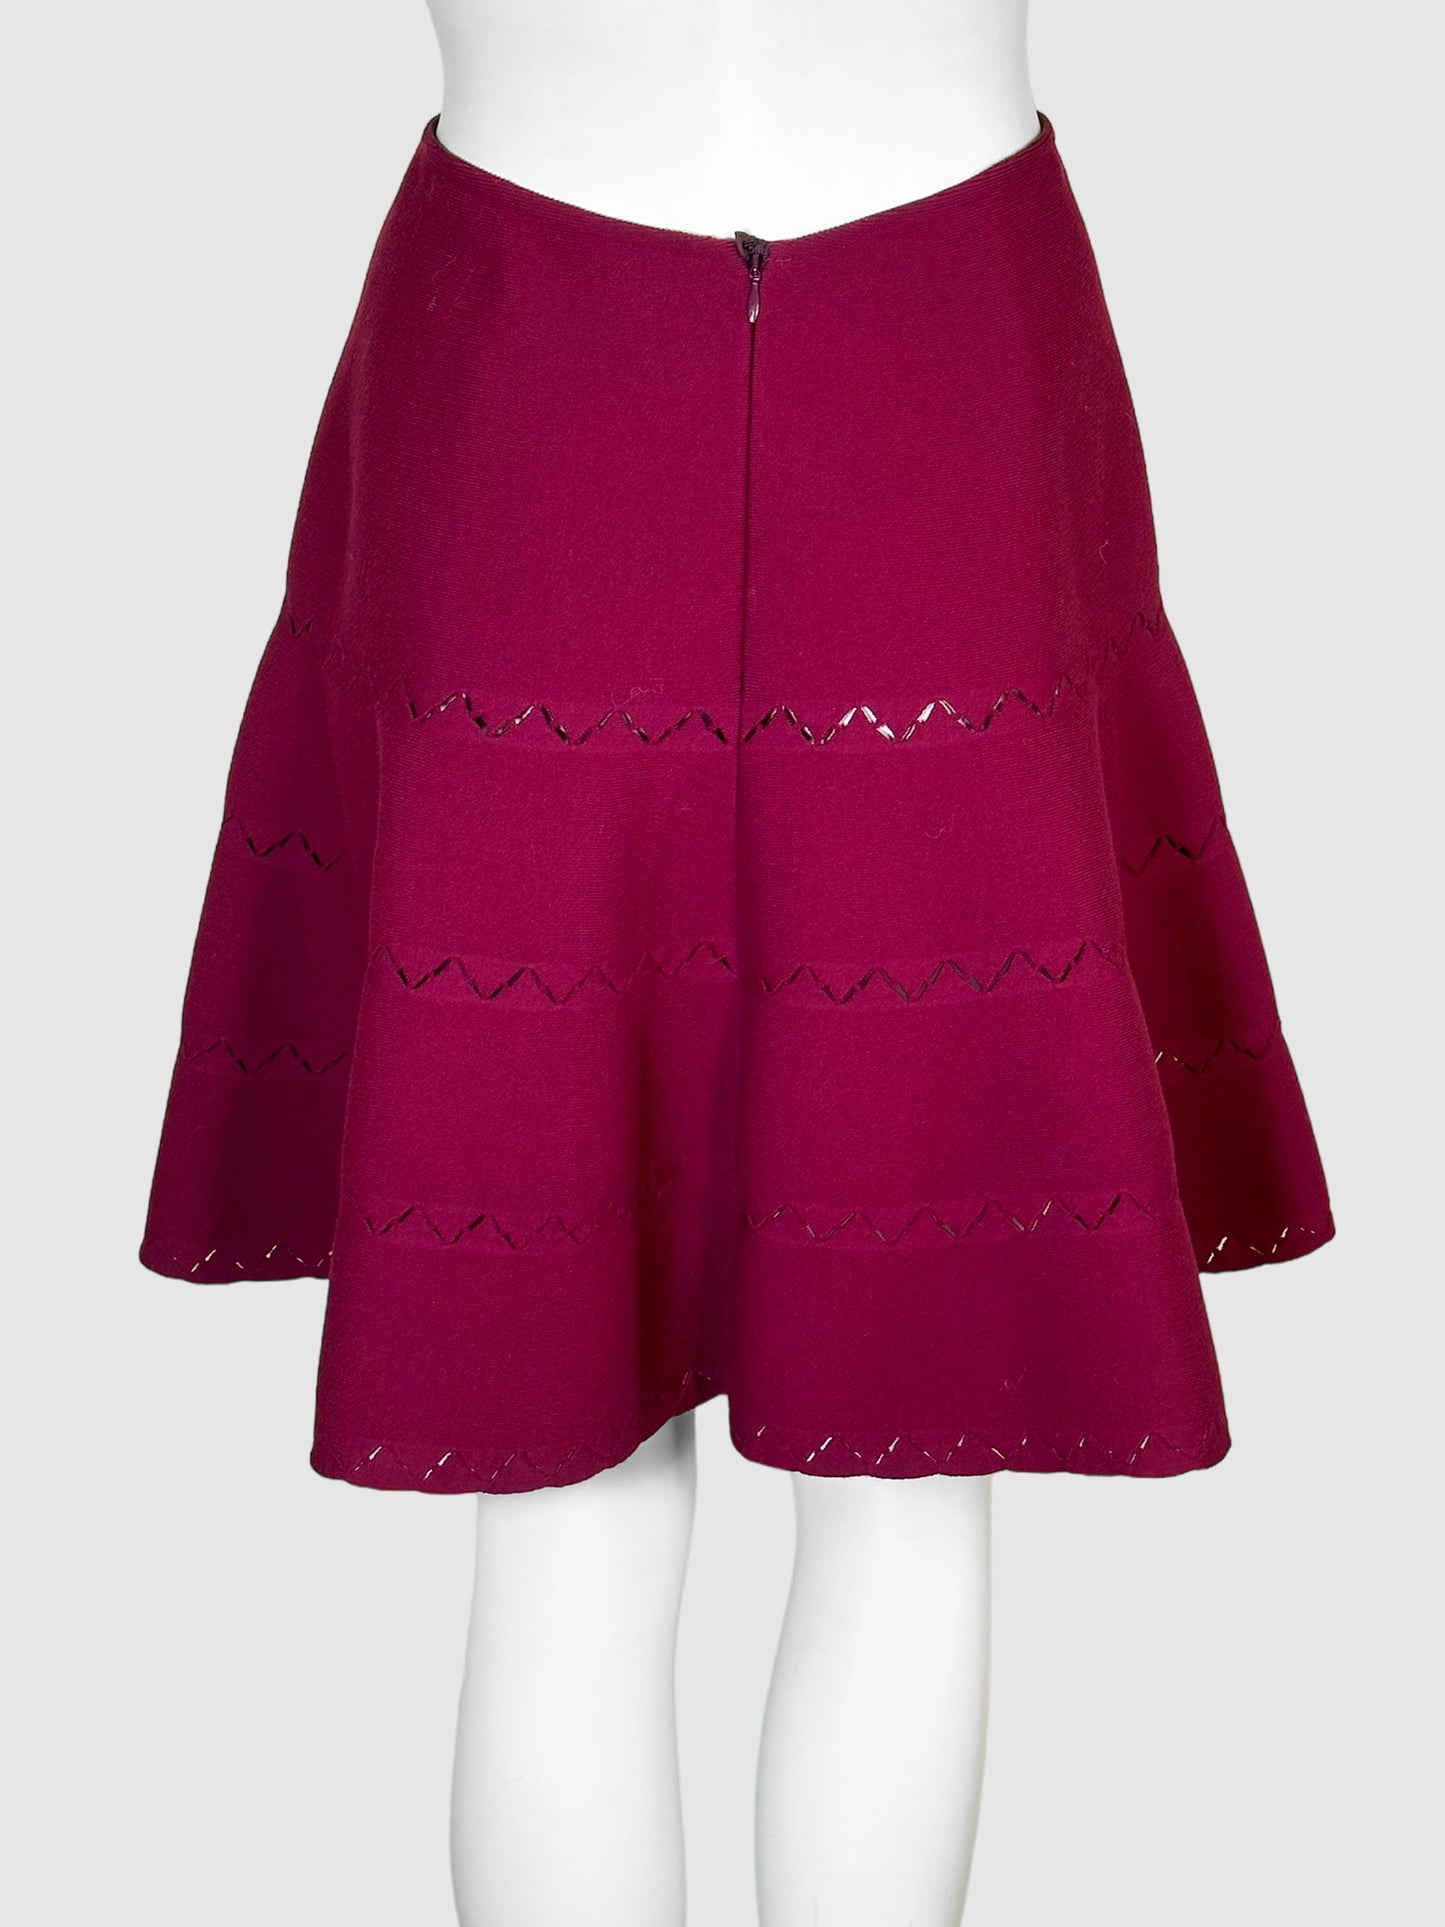 Alaïa Wool Blend Mini Skirt - Size 38